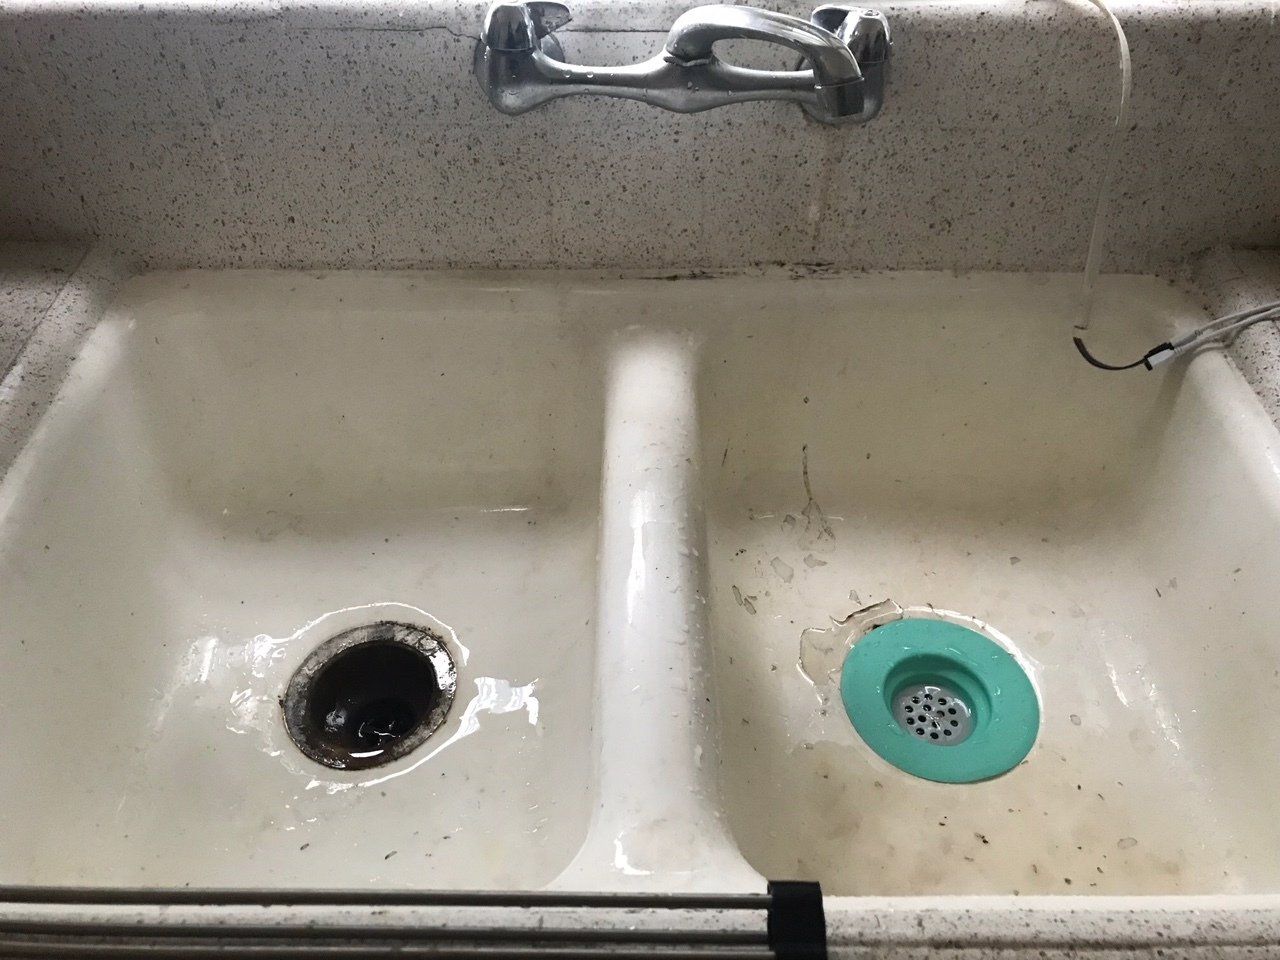 Double Bowl Kitchen Sink Before Refinishing | Mission Hills, CA | Julian's Porcelain & Fiberglass Expert